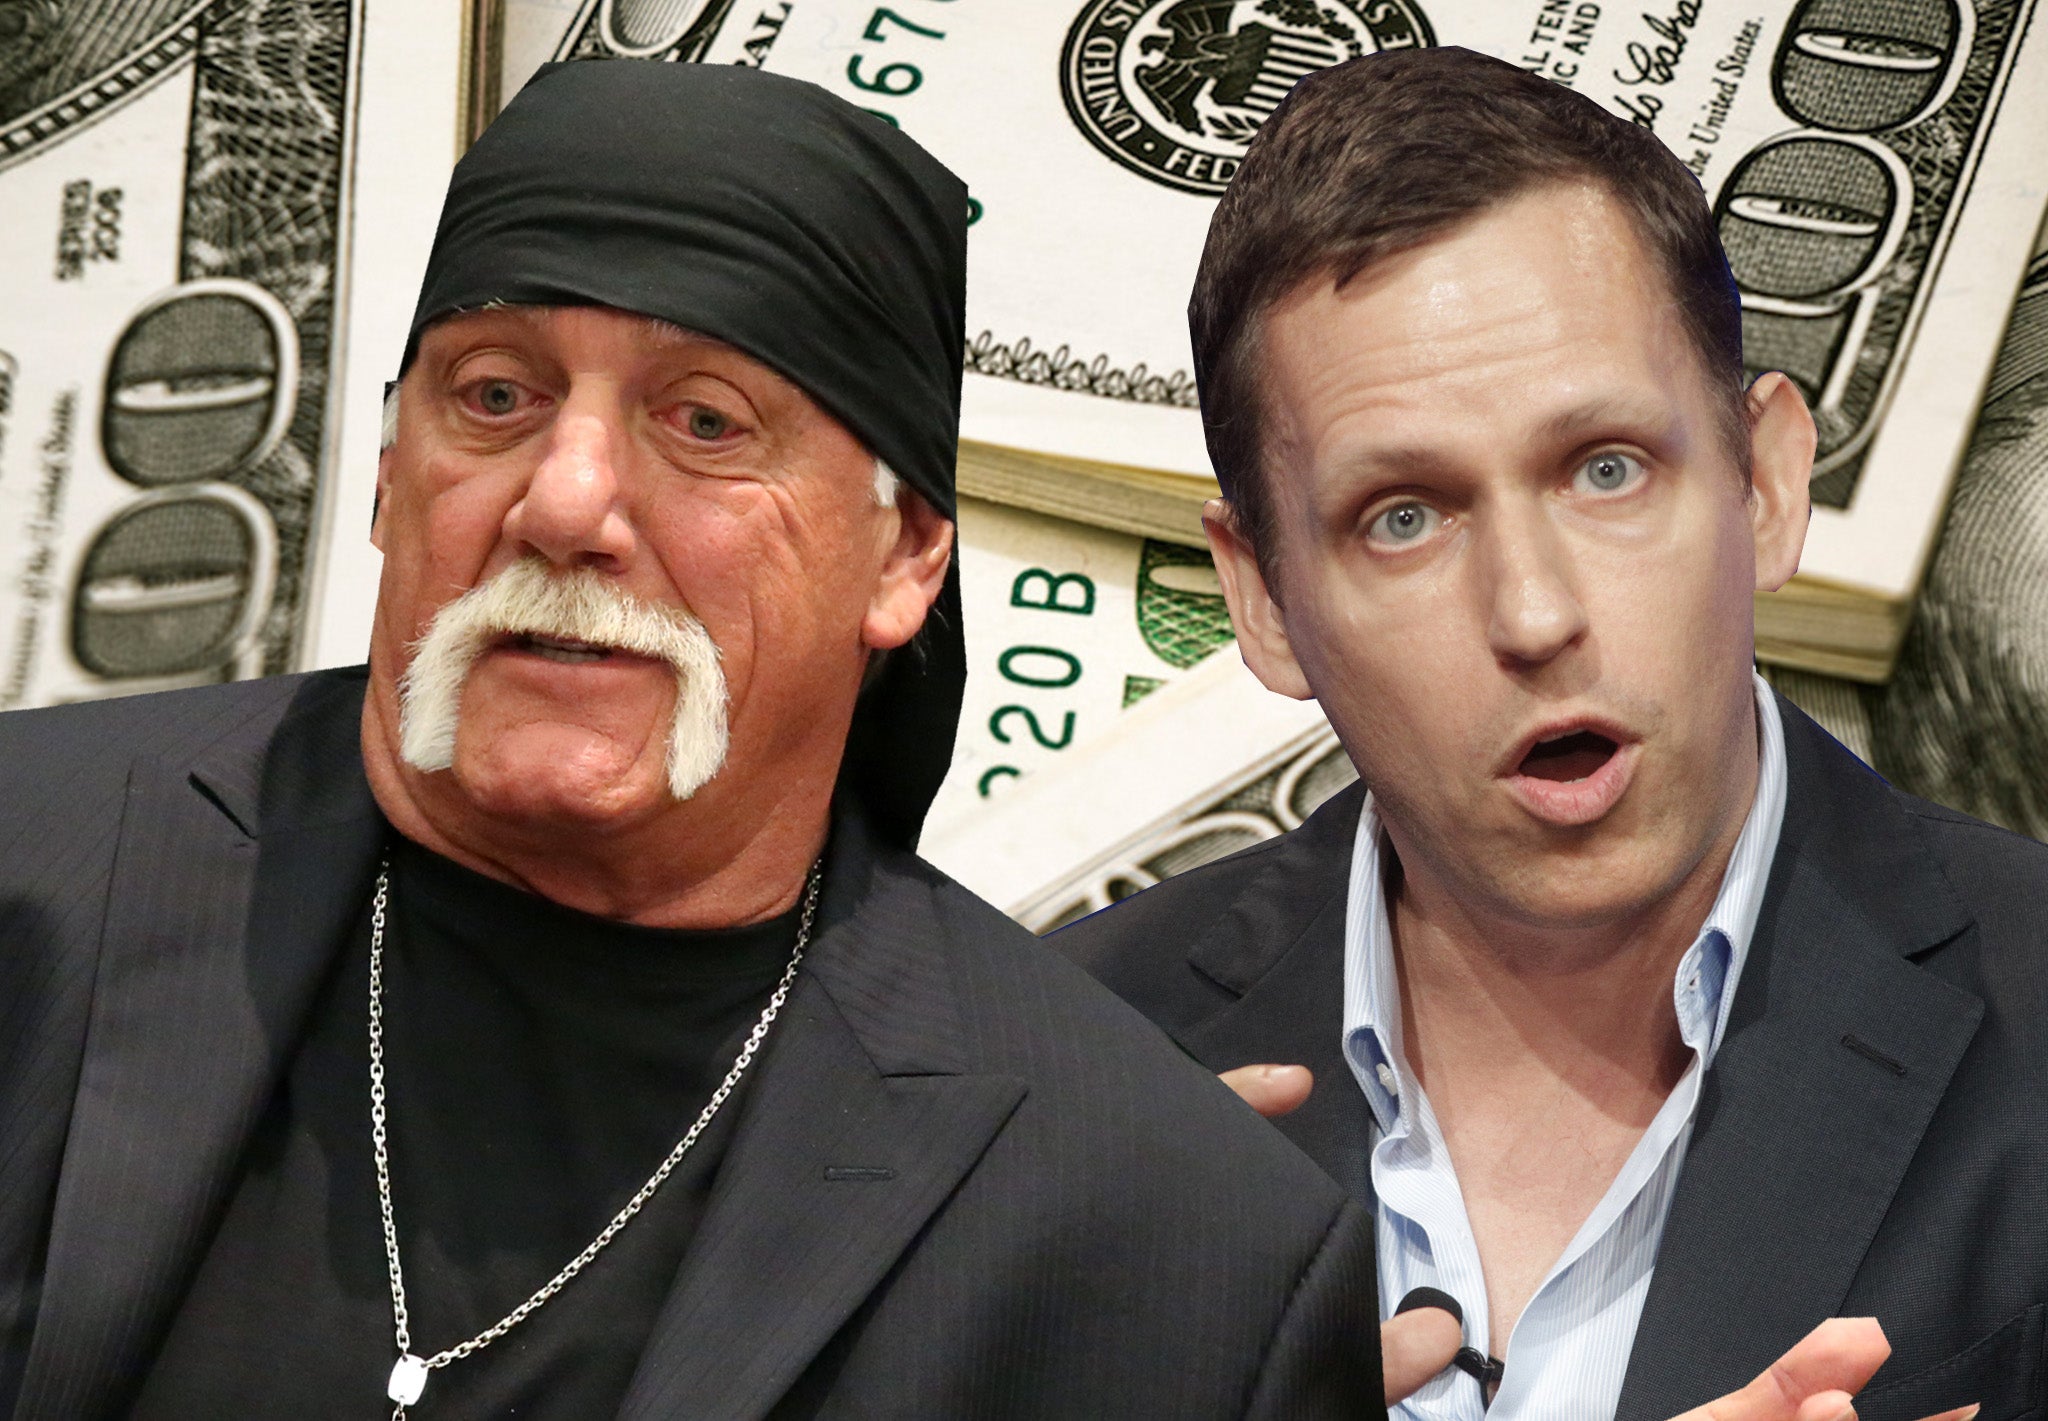 Peter Thiel is reportedly funding Hulk Hogan’s lawsuit against Gawker Media.